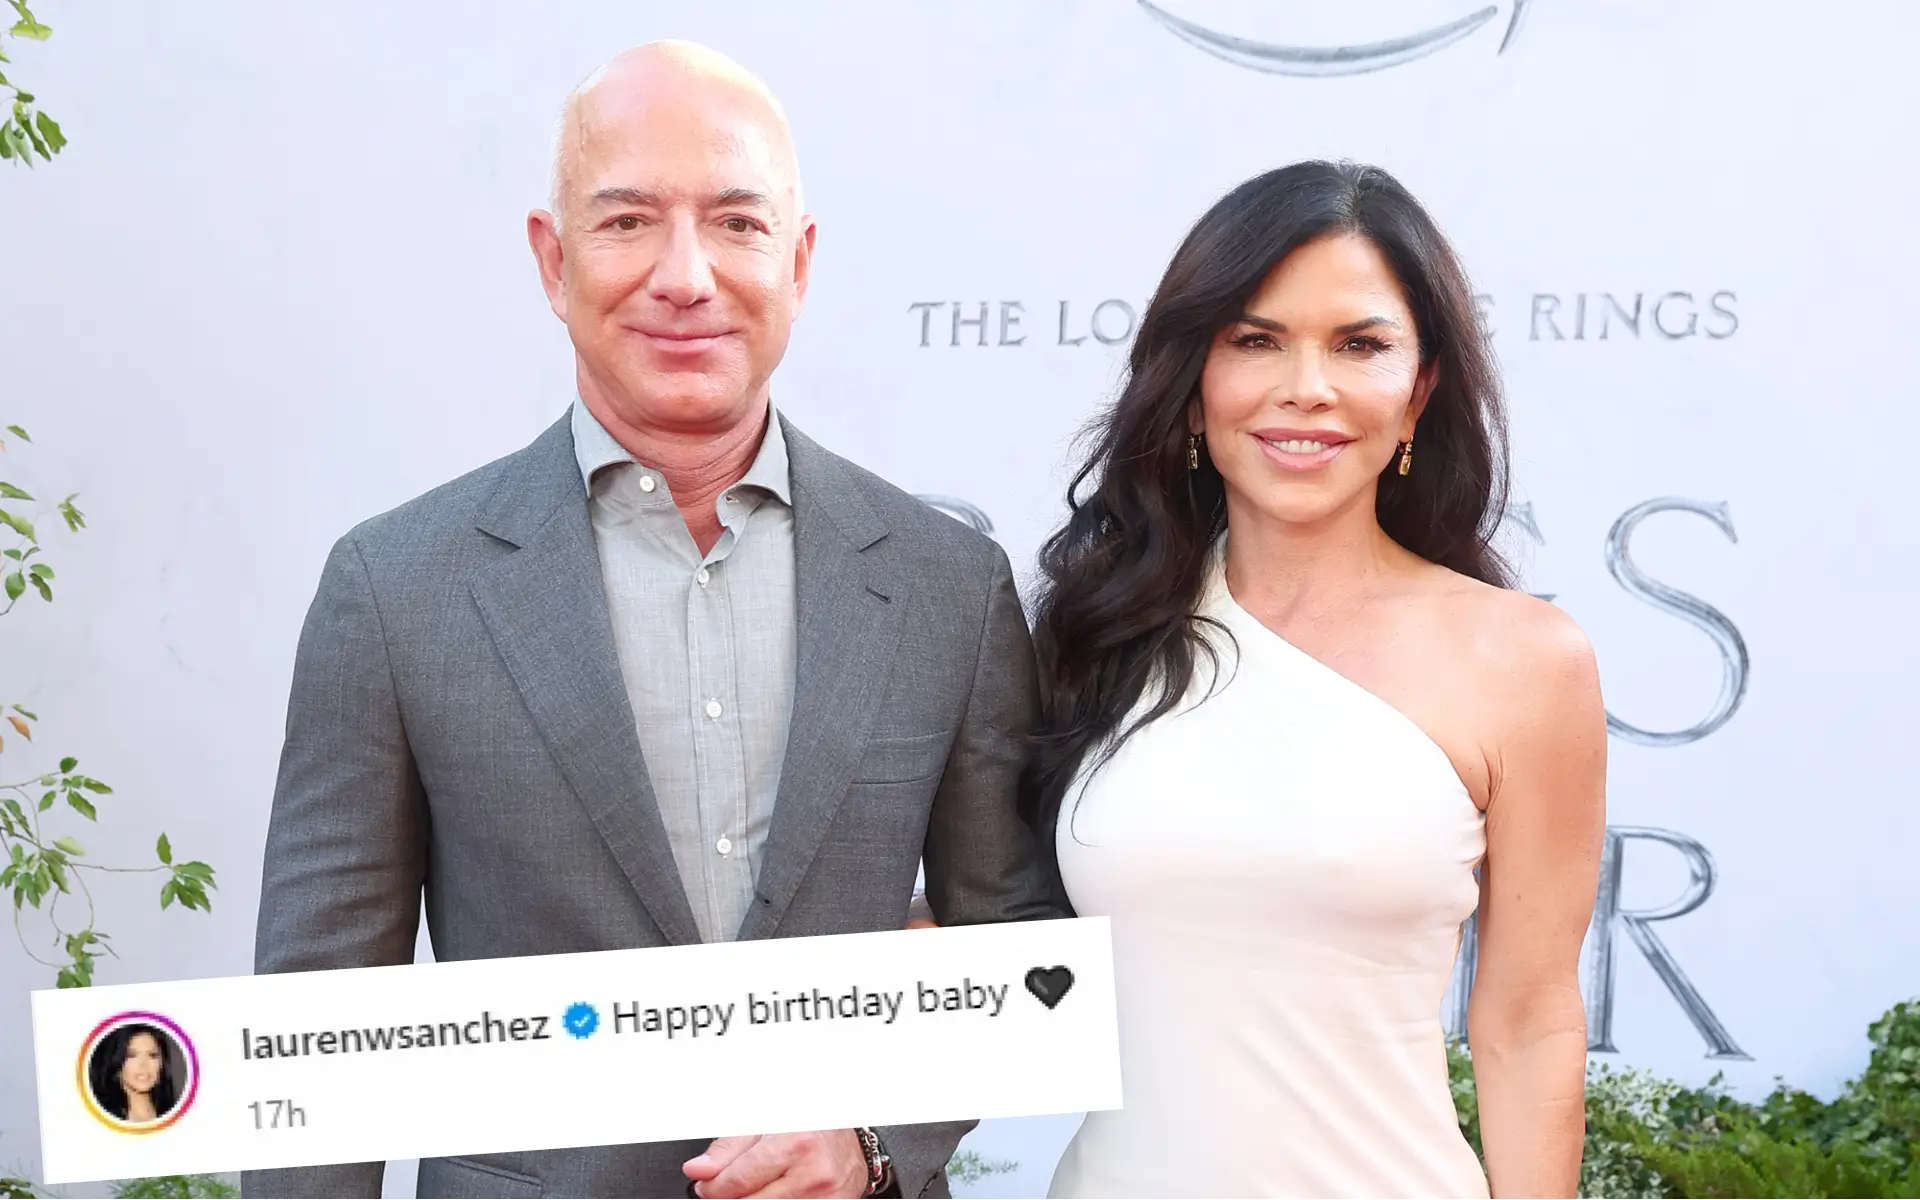 Lauren Sanchez’s Thoughtful Gesture for Jeff Bezos’ 60th Birthday